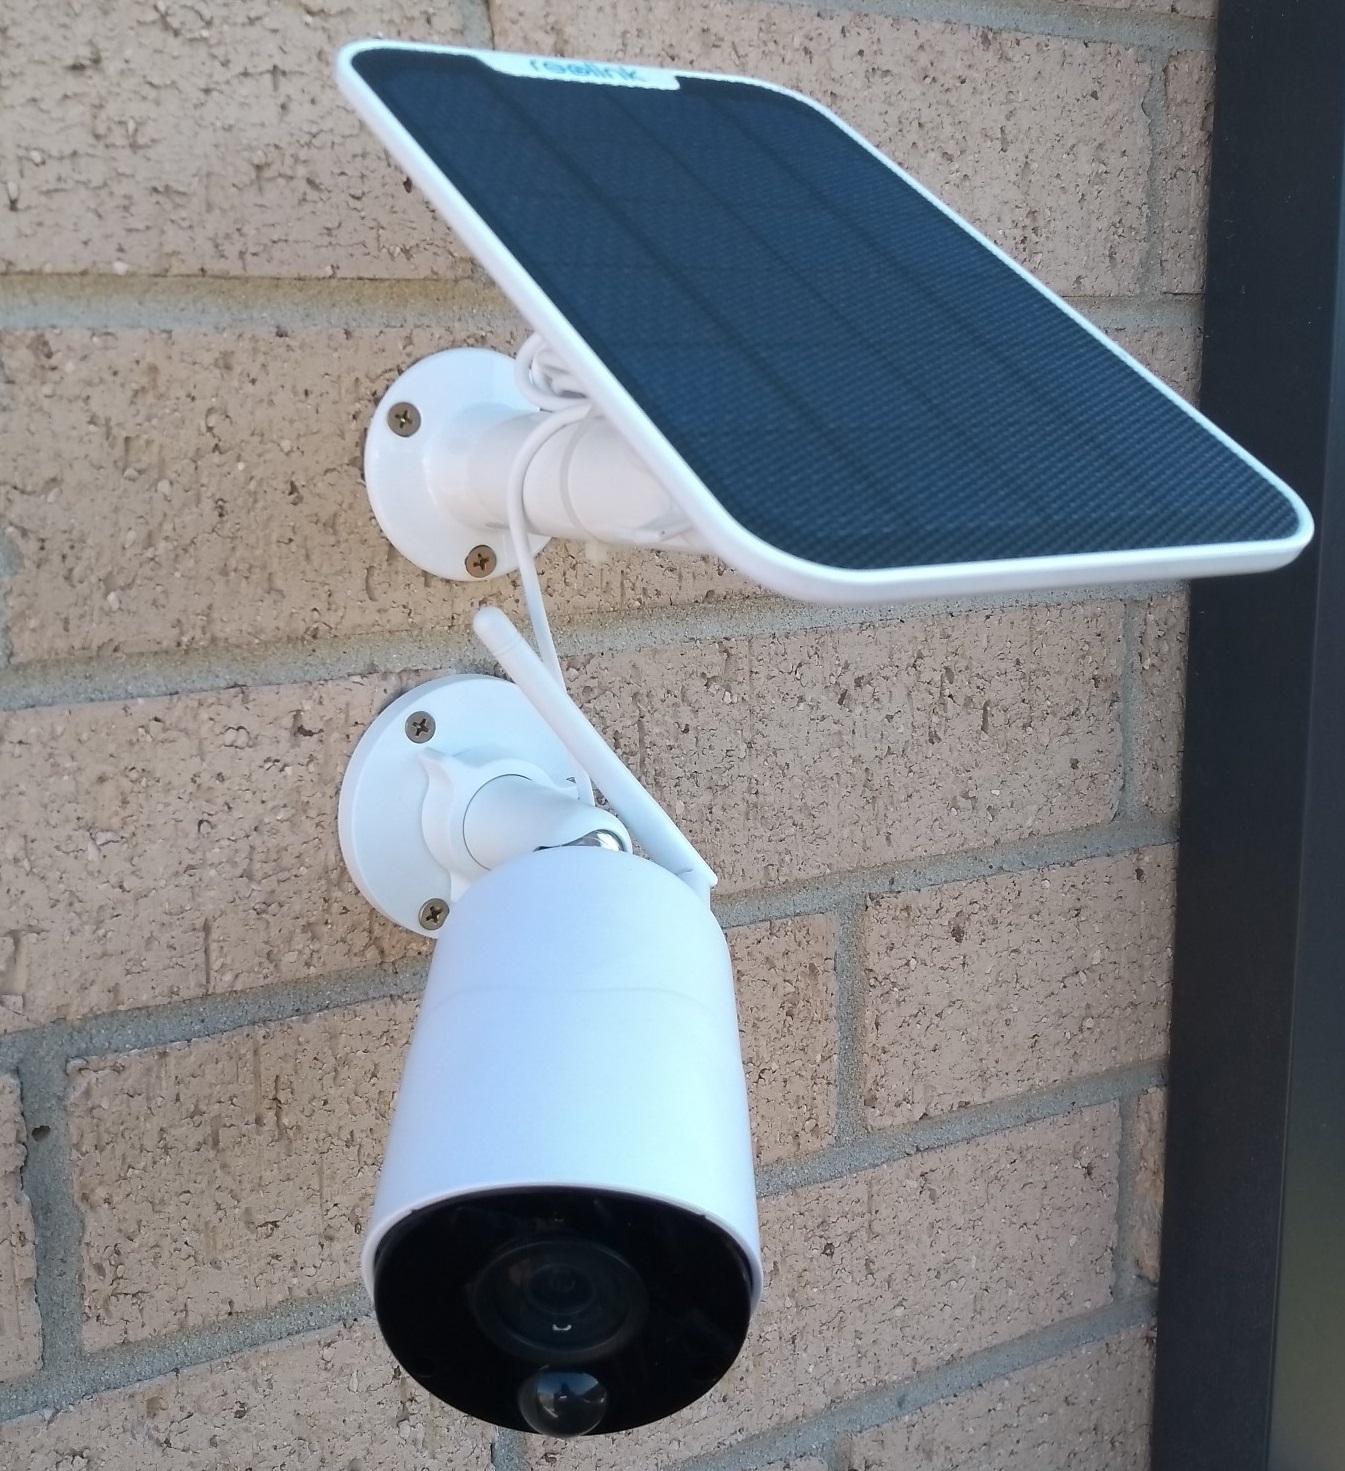 4G CCTV camera with solar power